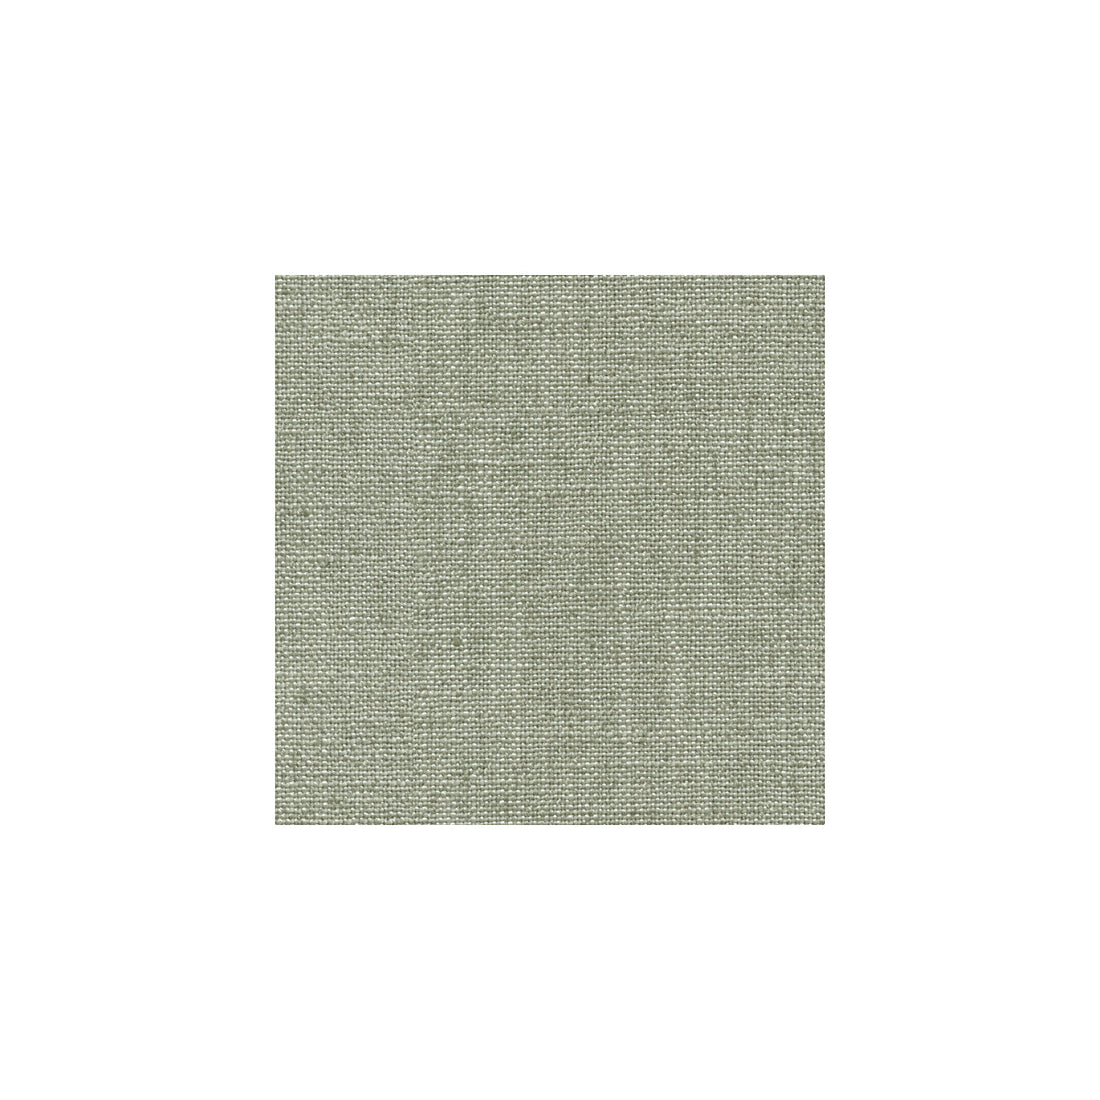 Kravet Smart fabric in 33140-11 color - pattern 33140.11.0 - by Kravet Smart in the Sarah Richardson Affinity collection